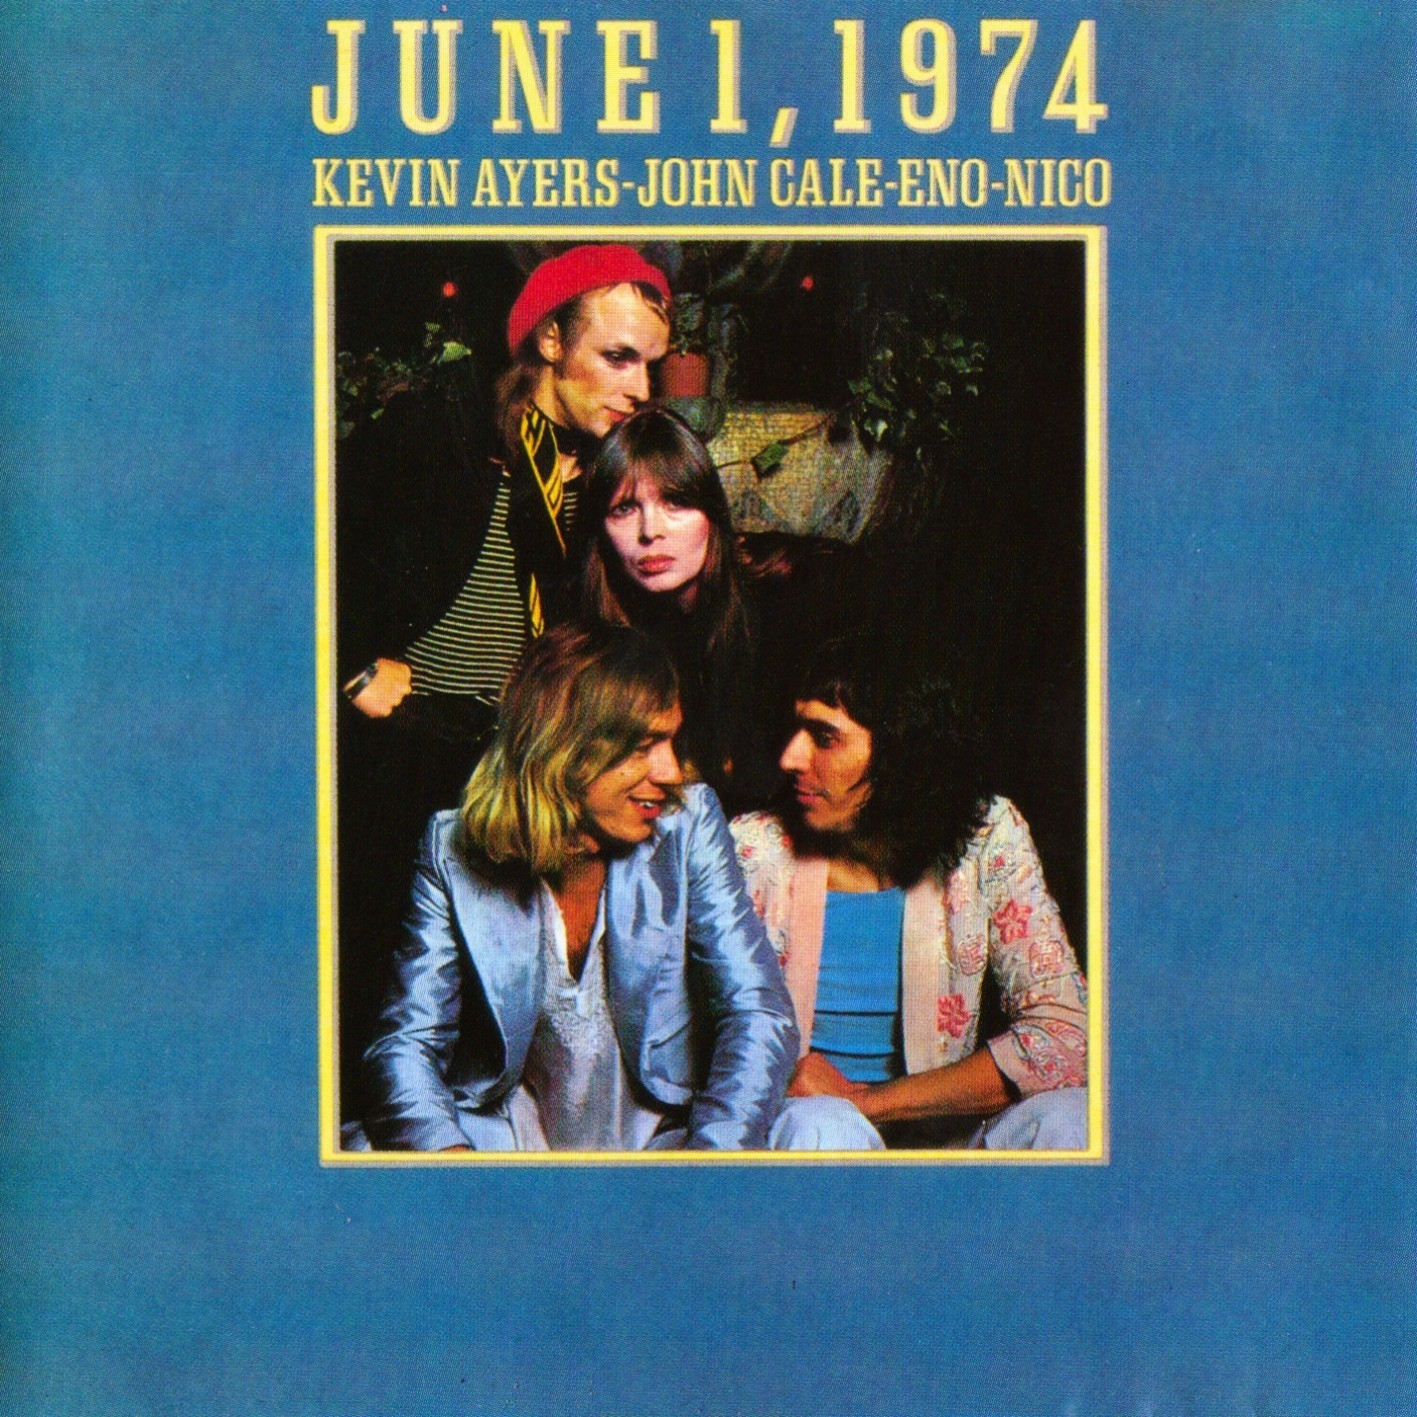 Kevin Ayers, John Cale, Brian Eno & Nico - June 1, 1974 - Front